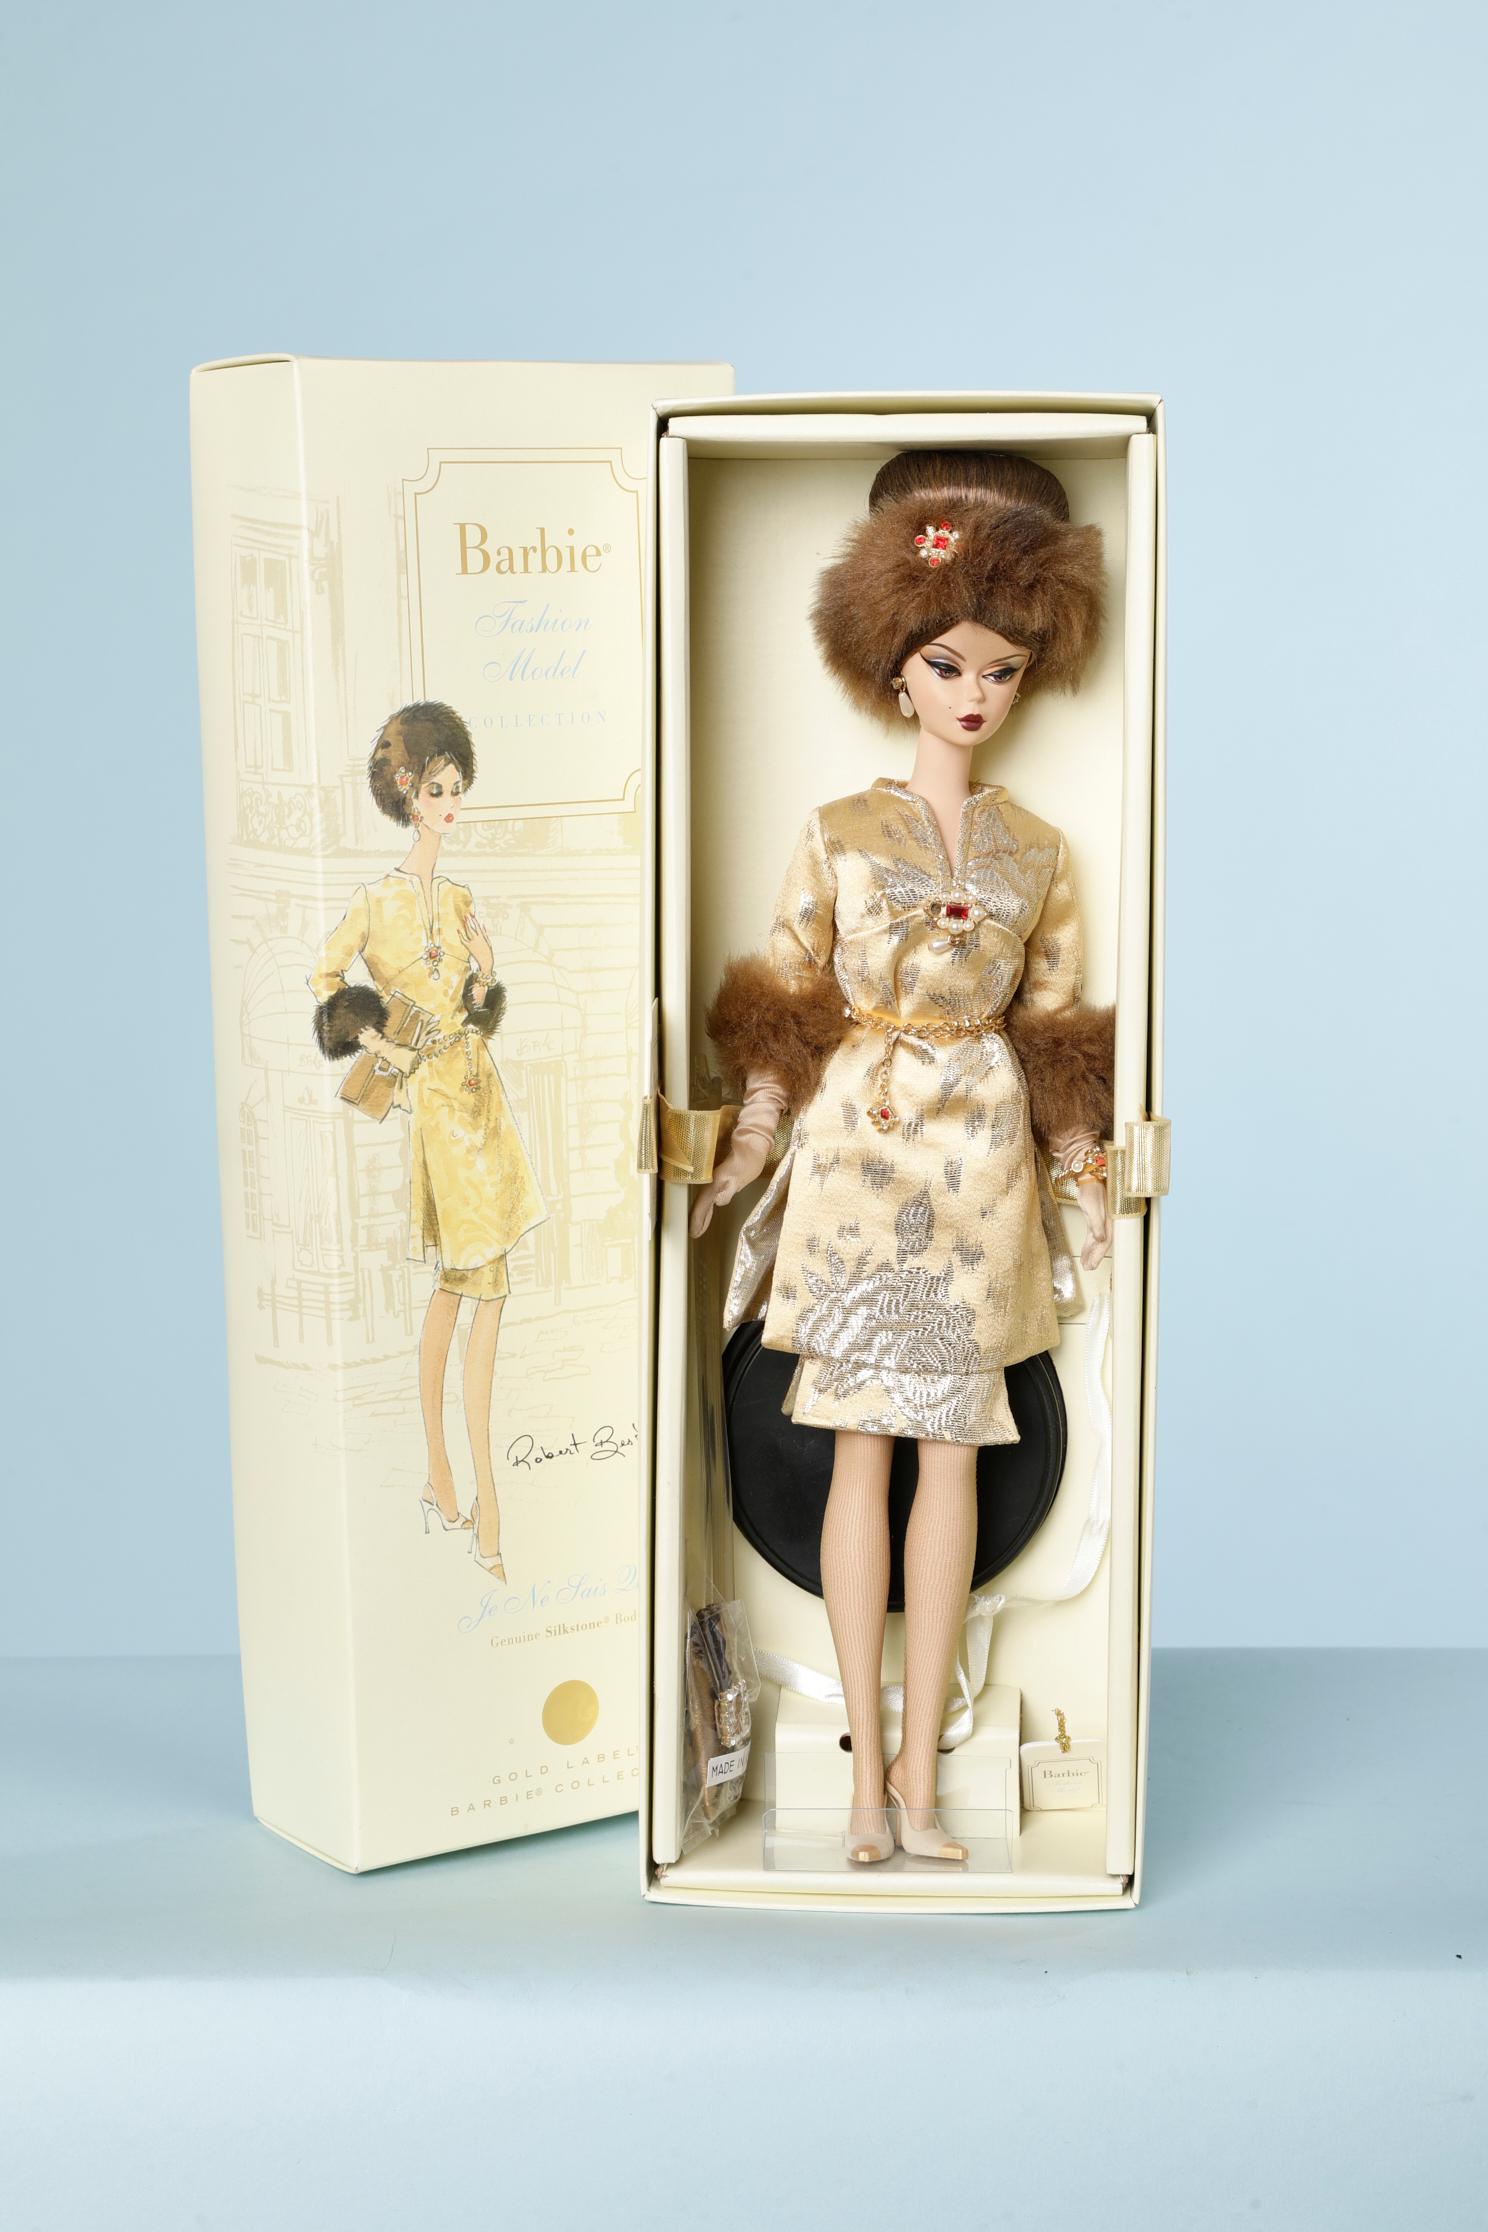 Barbie Fashion Model / Gold Label / 